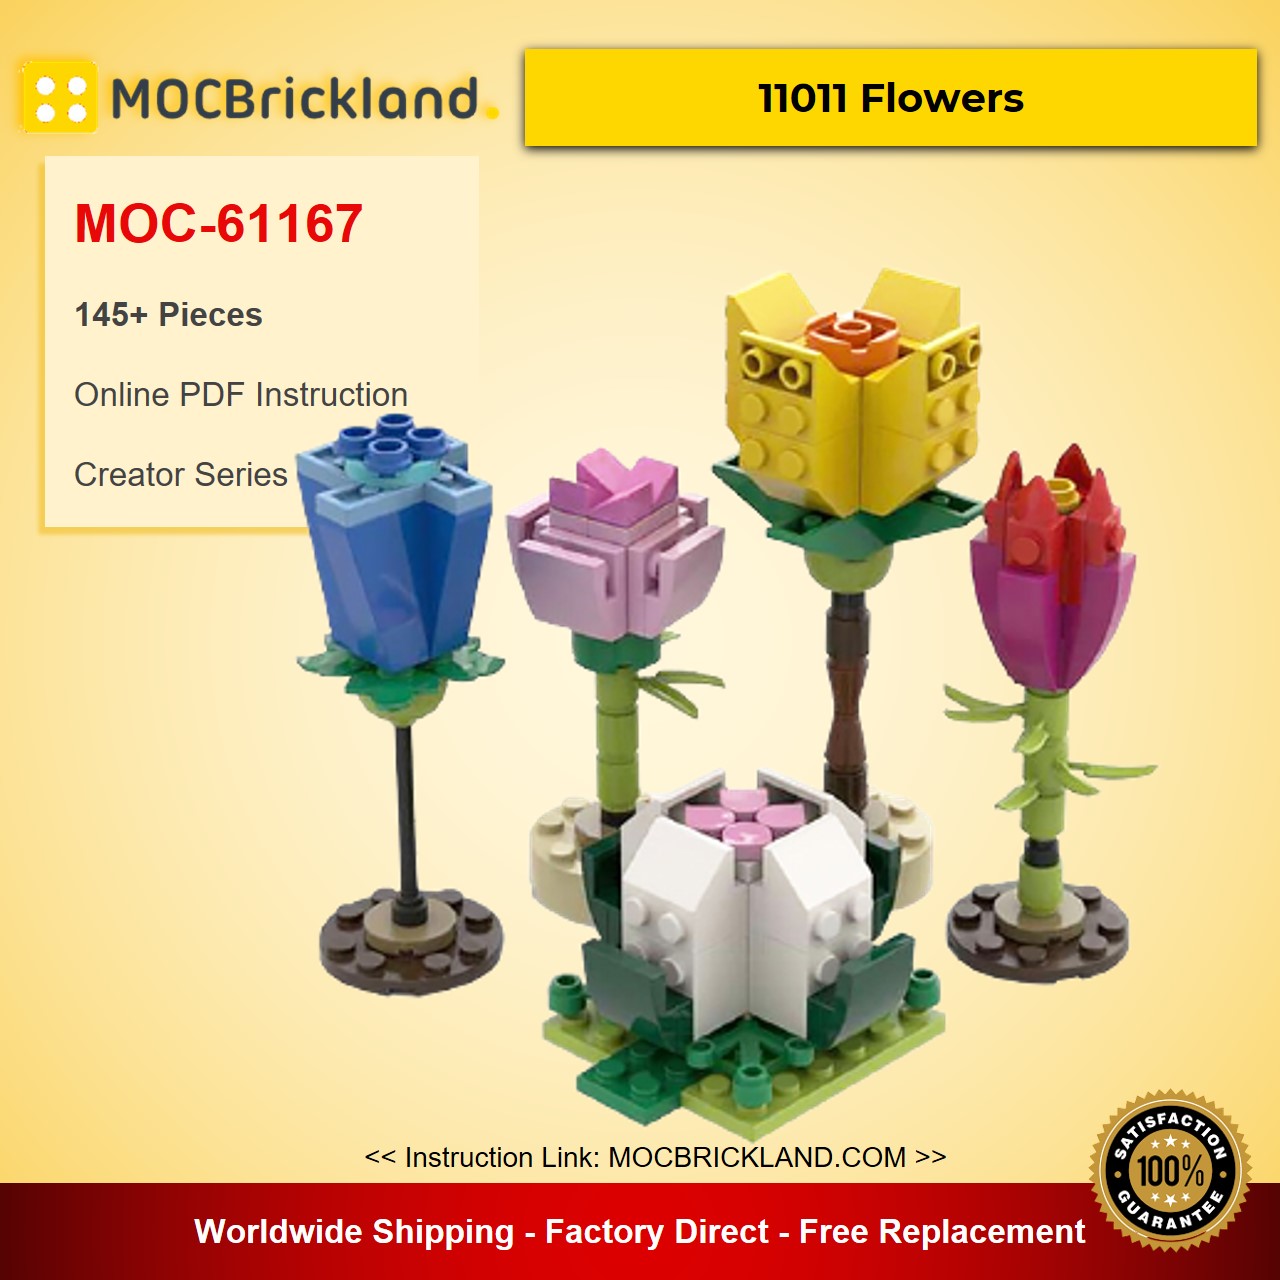 MOCBRICKLAND MOC-61167 11011 Flowers